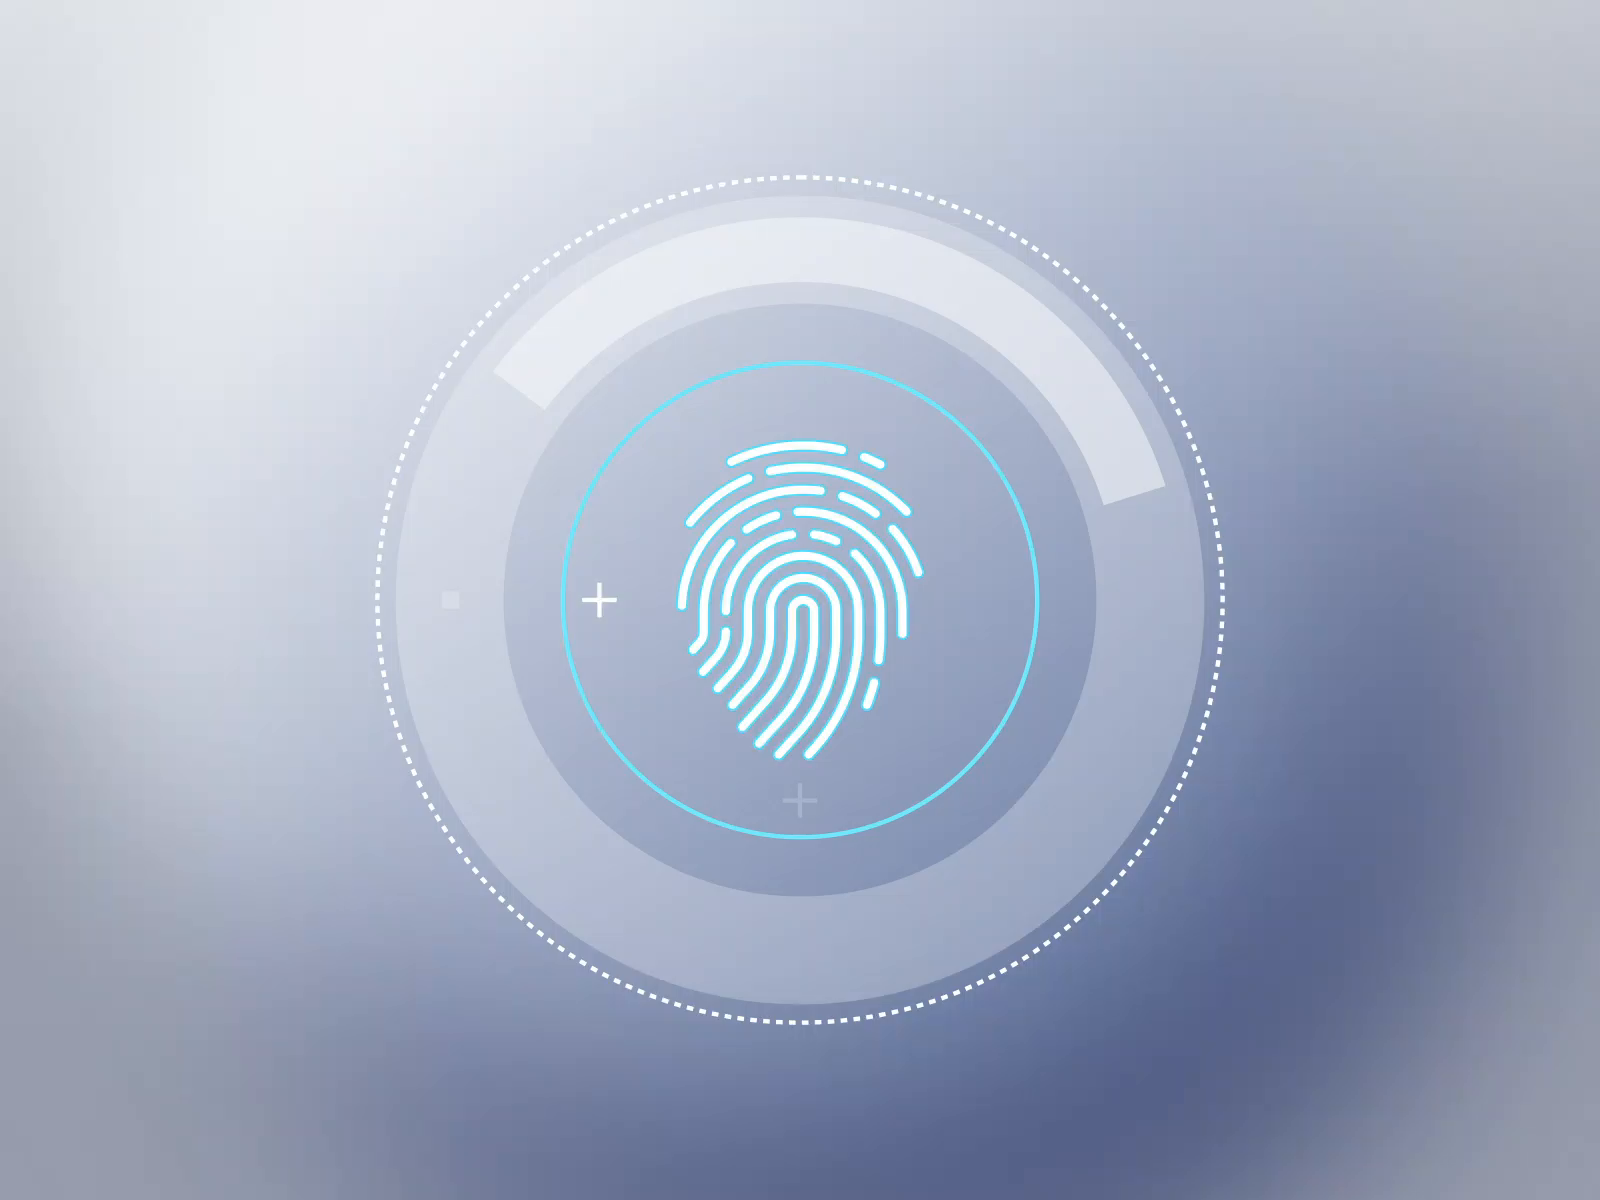 Fingerprint Scanner animation for mobile app by Harshad Gholap on Dribbble